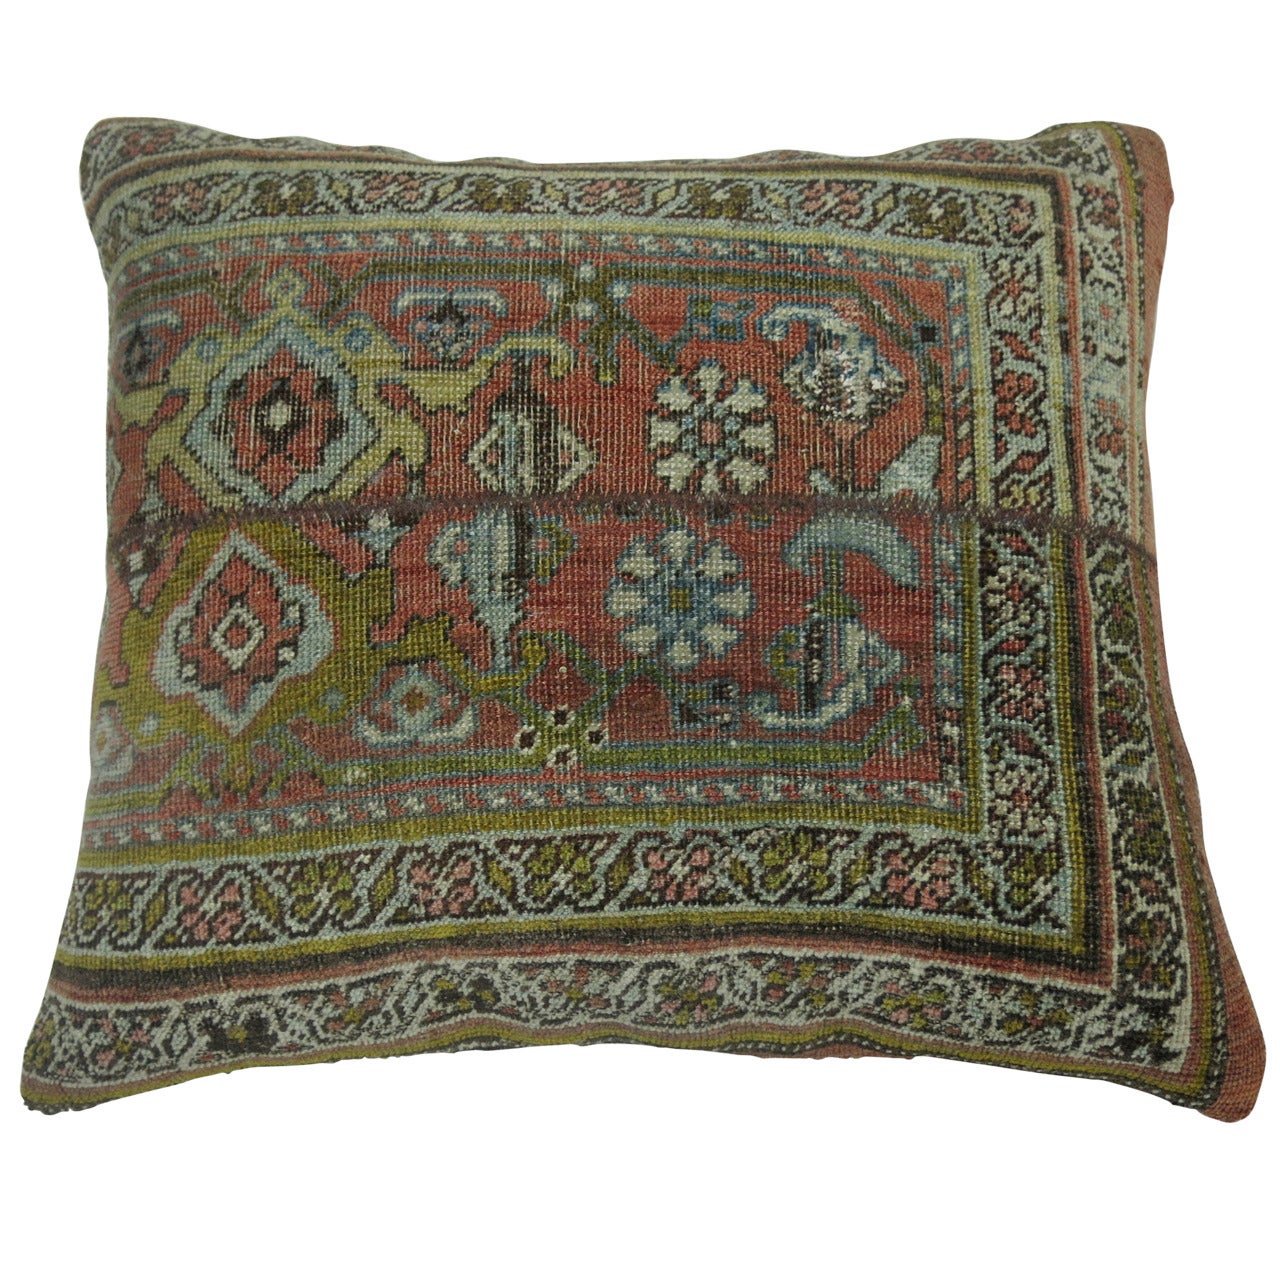 Antique Persian Bidjar Rug Pillow